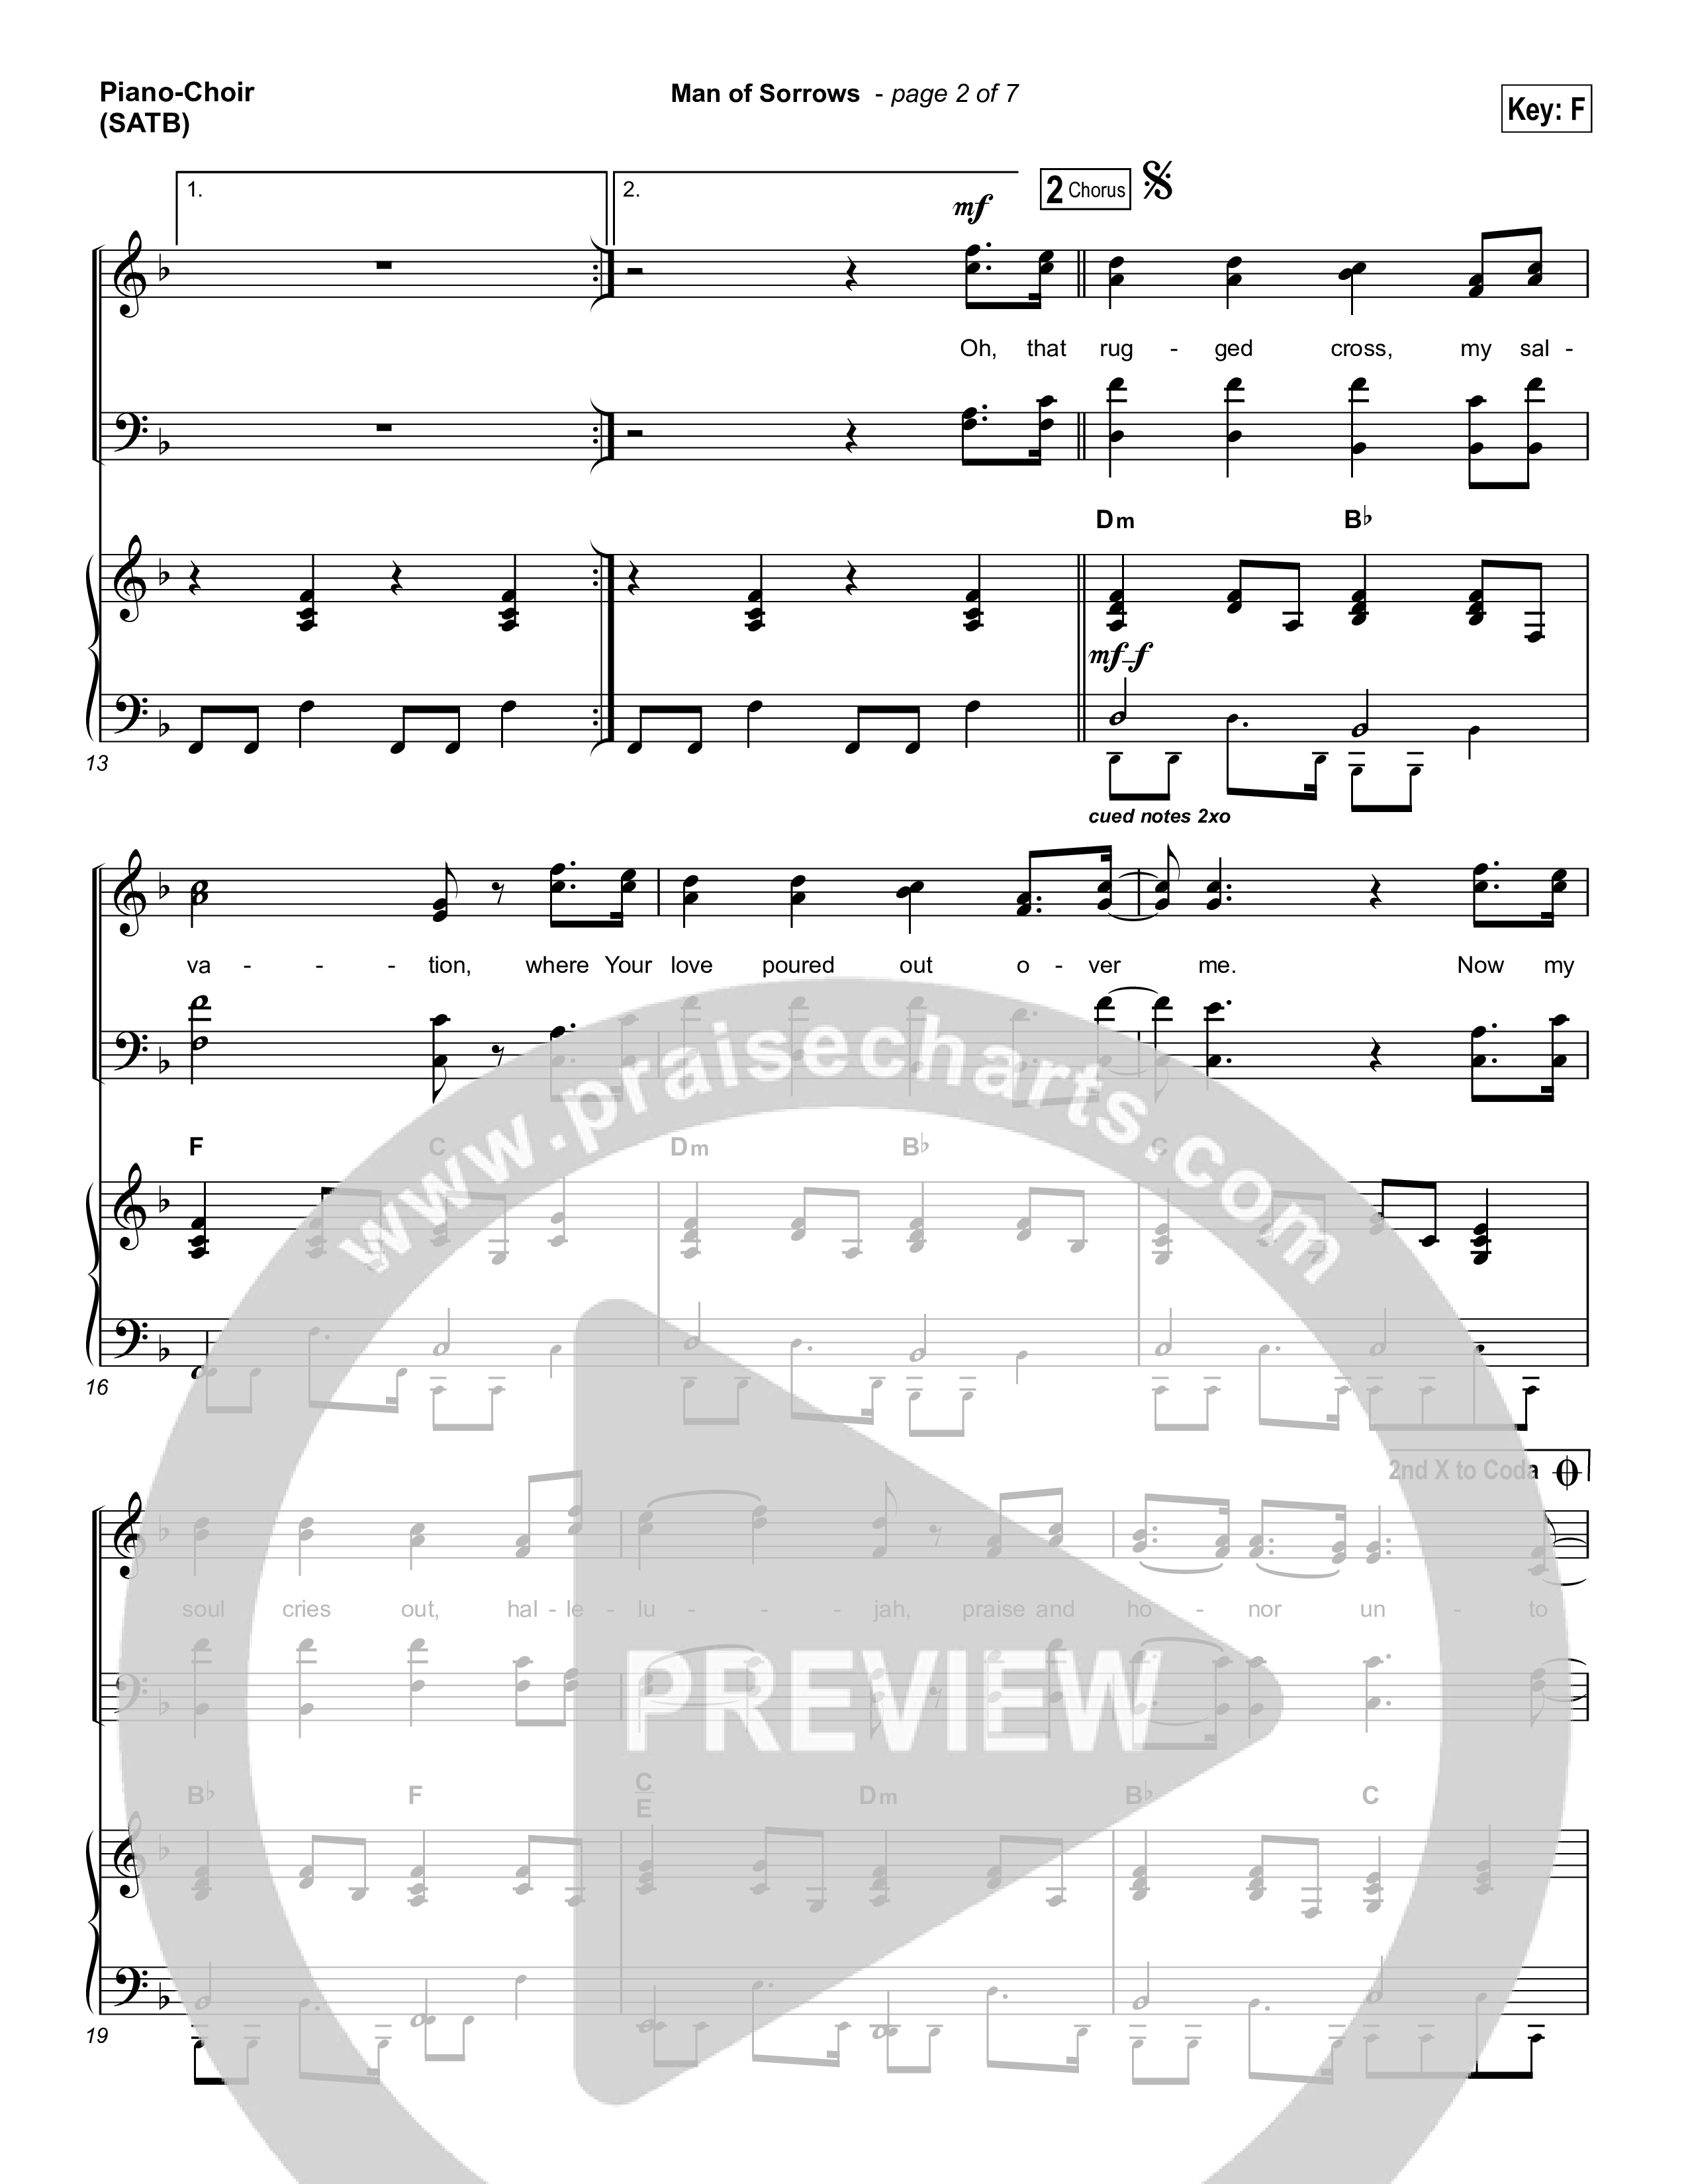 Man Of Sorrows (Choral Anthem SATB) Piano/Vocal (SATB) (Hillsong Worship / Arr. Erik Foster)